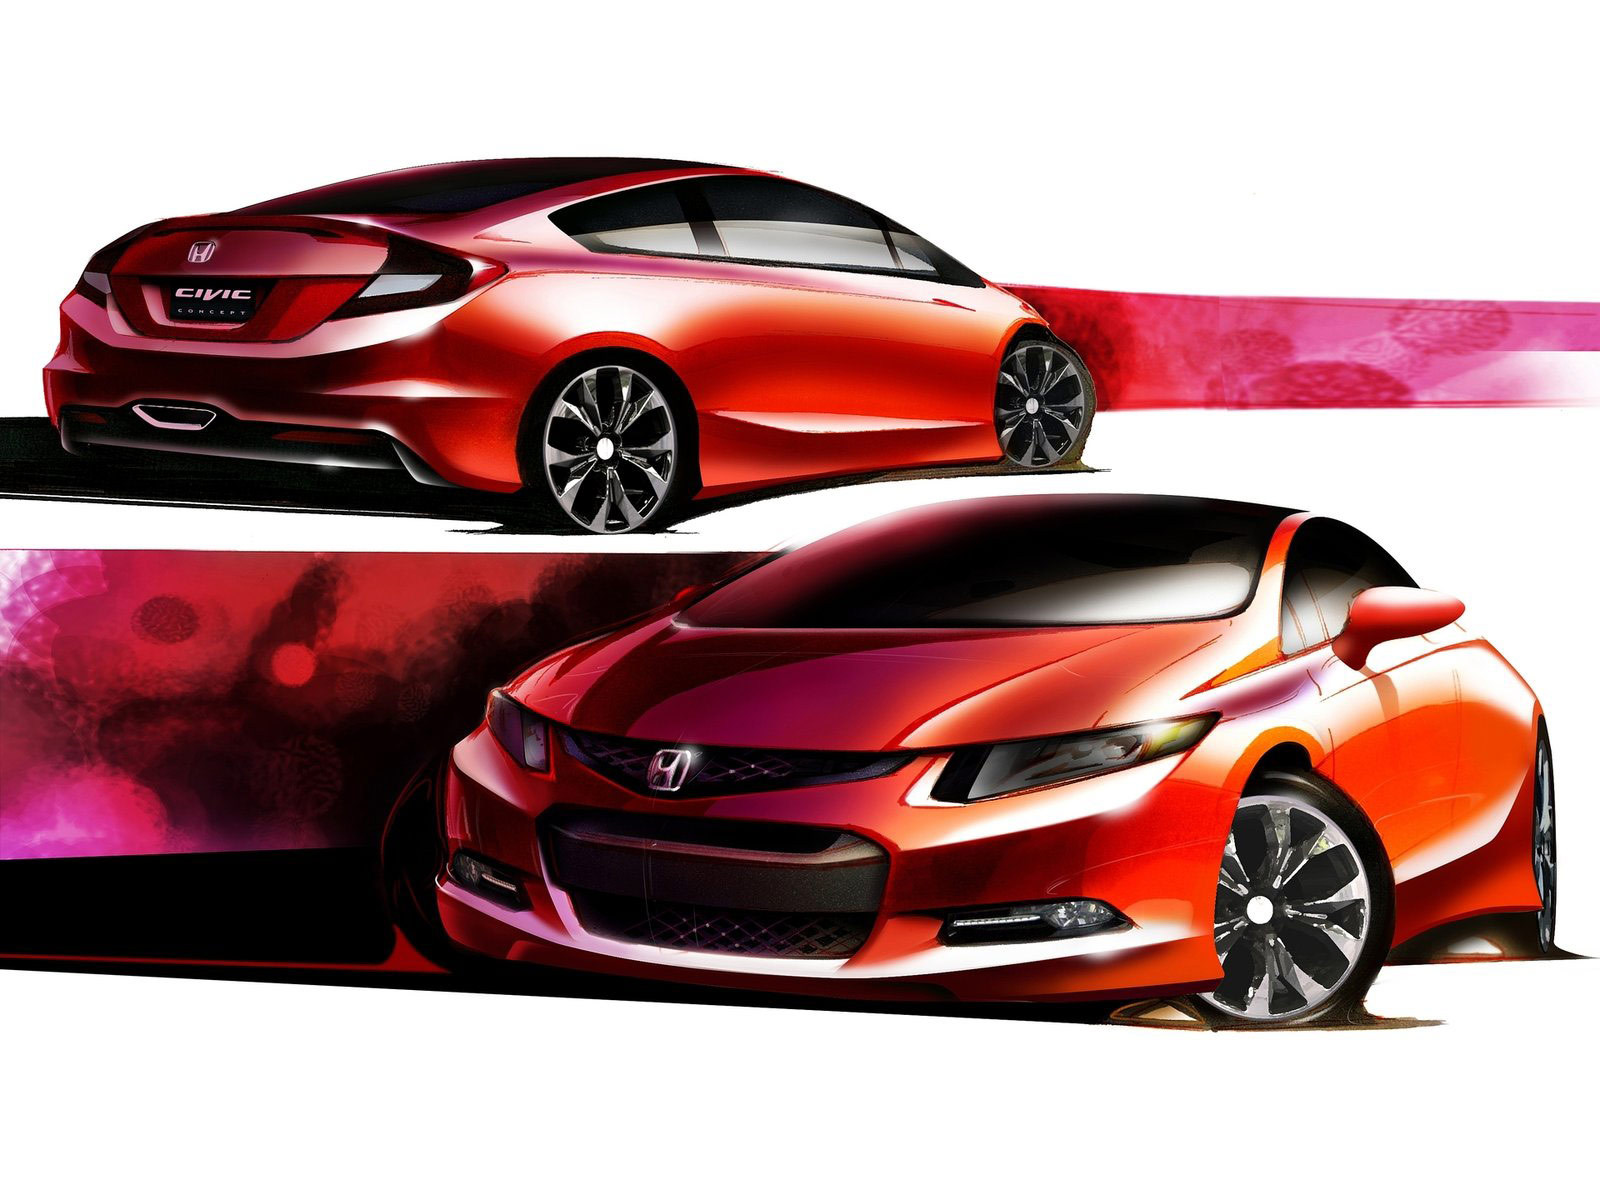 2012 Honda Civic Concept teased ahead of 2011